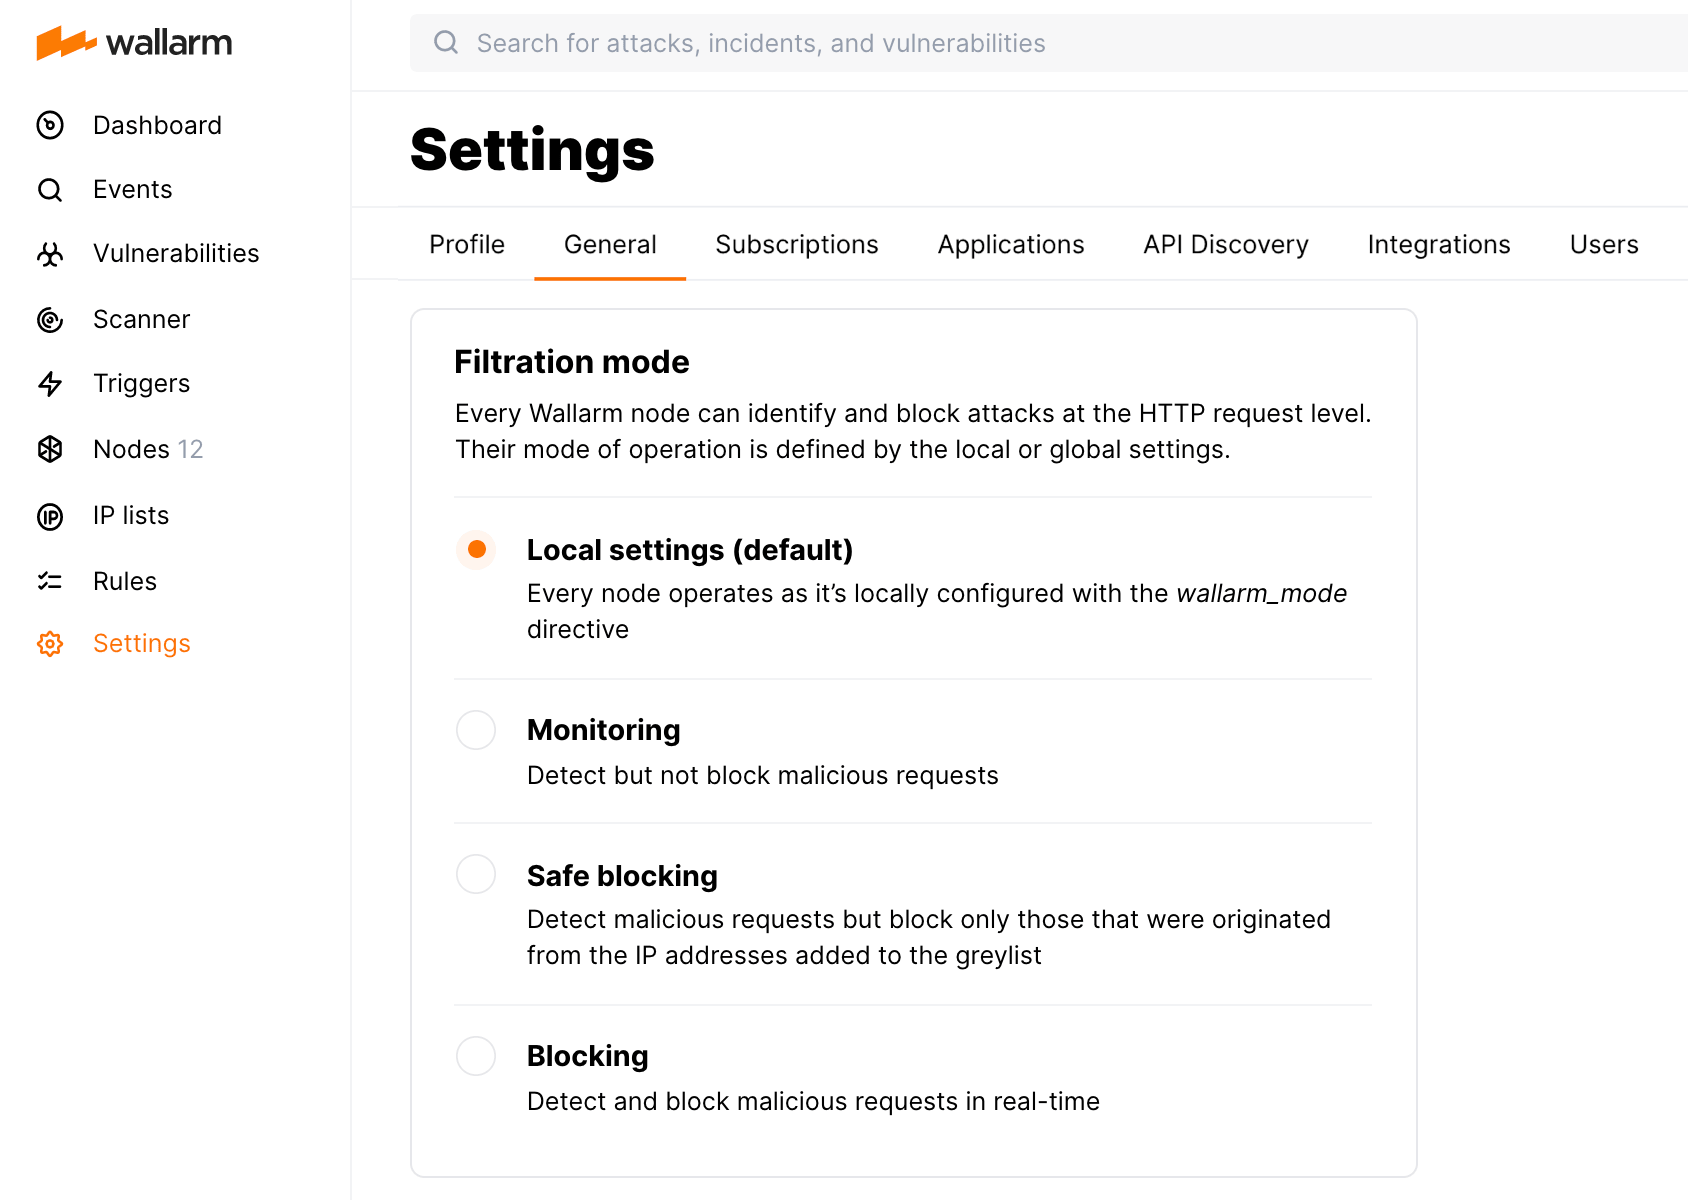 The general settings tab